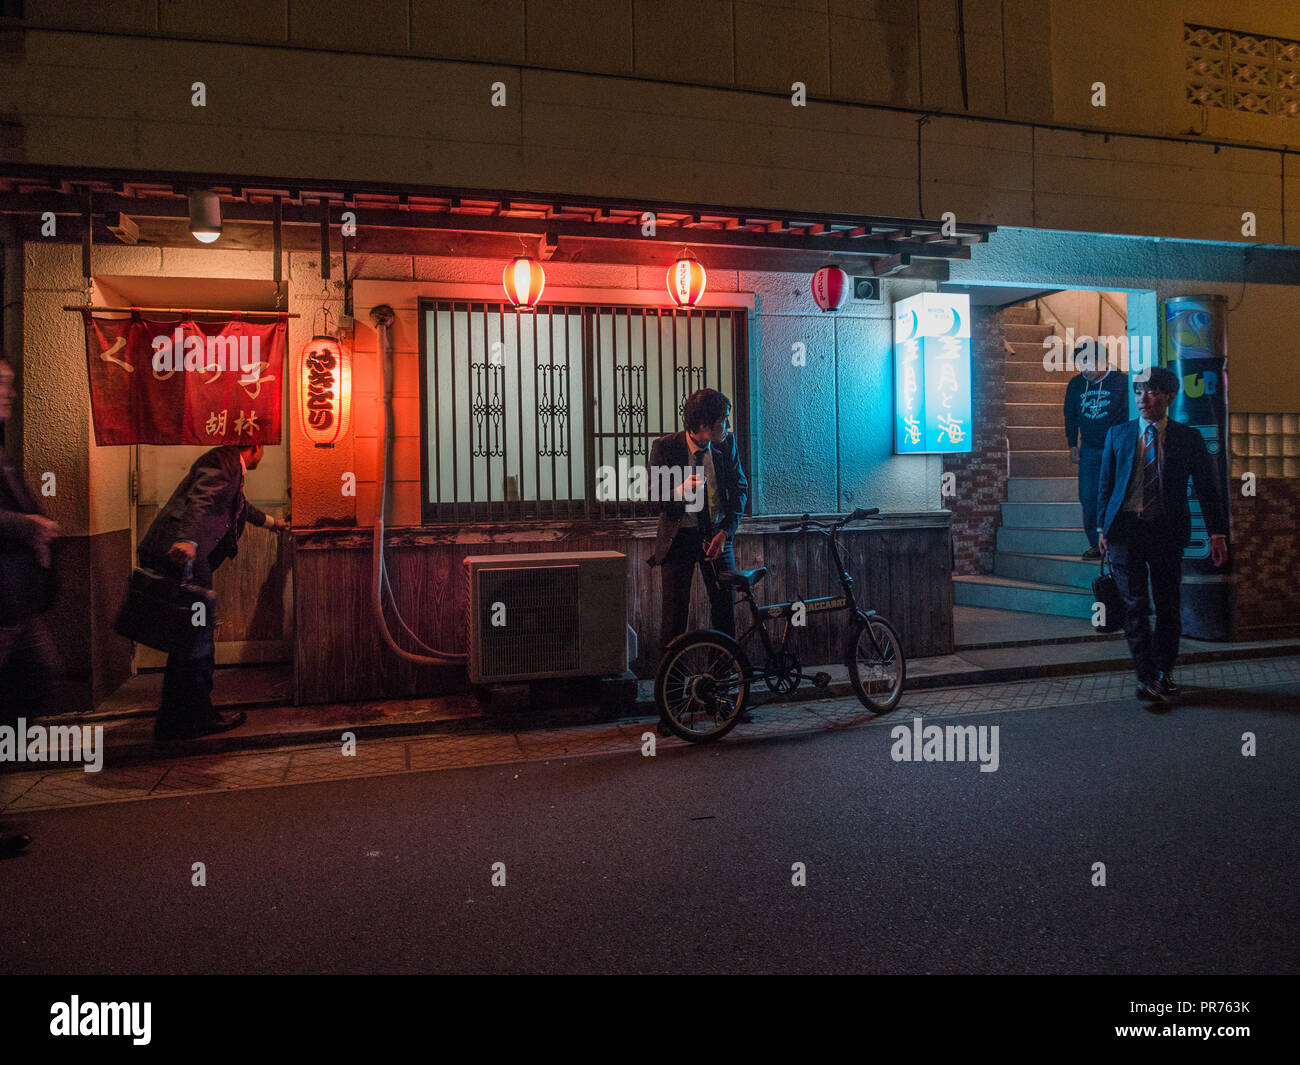 Salary men in street outside hostess club, entertainment district at night, Bungotakeda, Oita, Kyushu, Japan Stock Photo